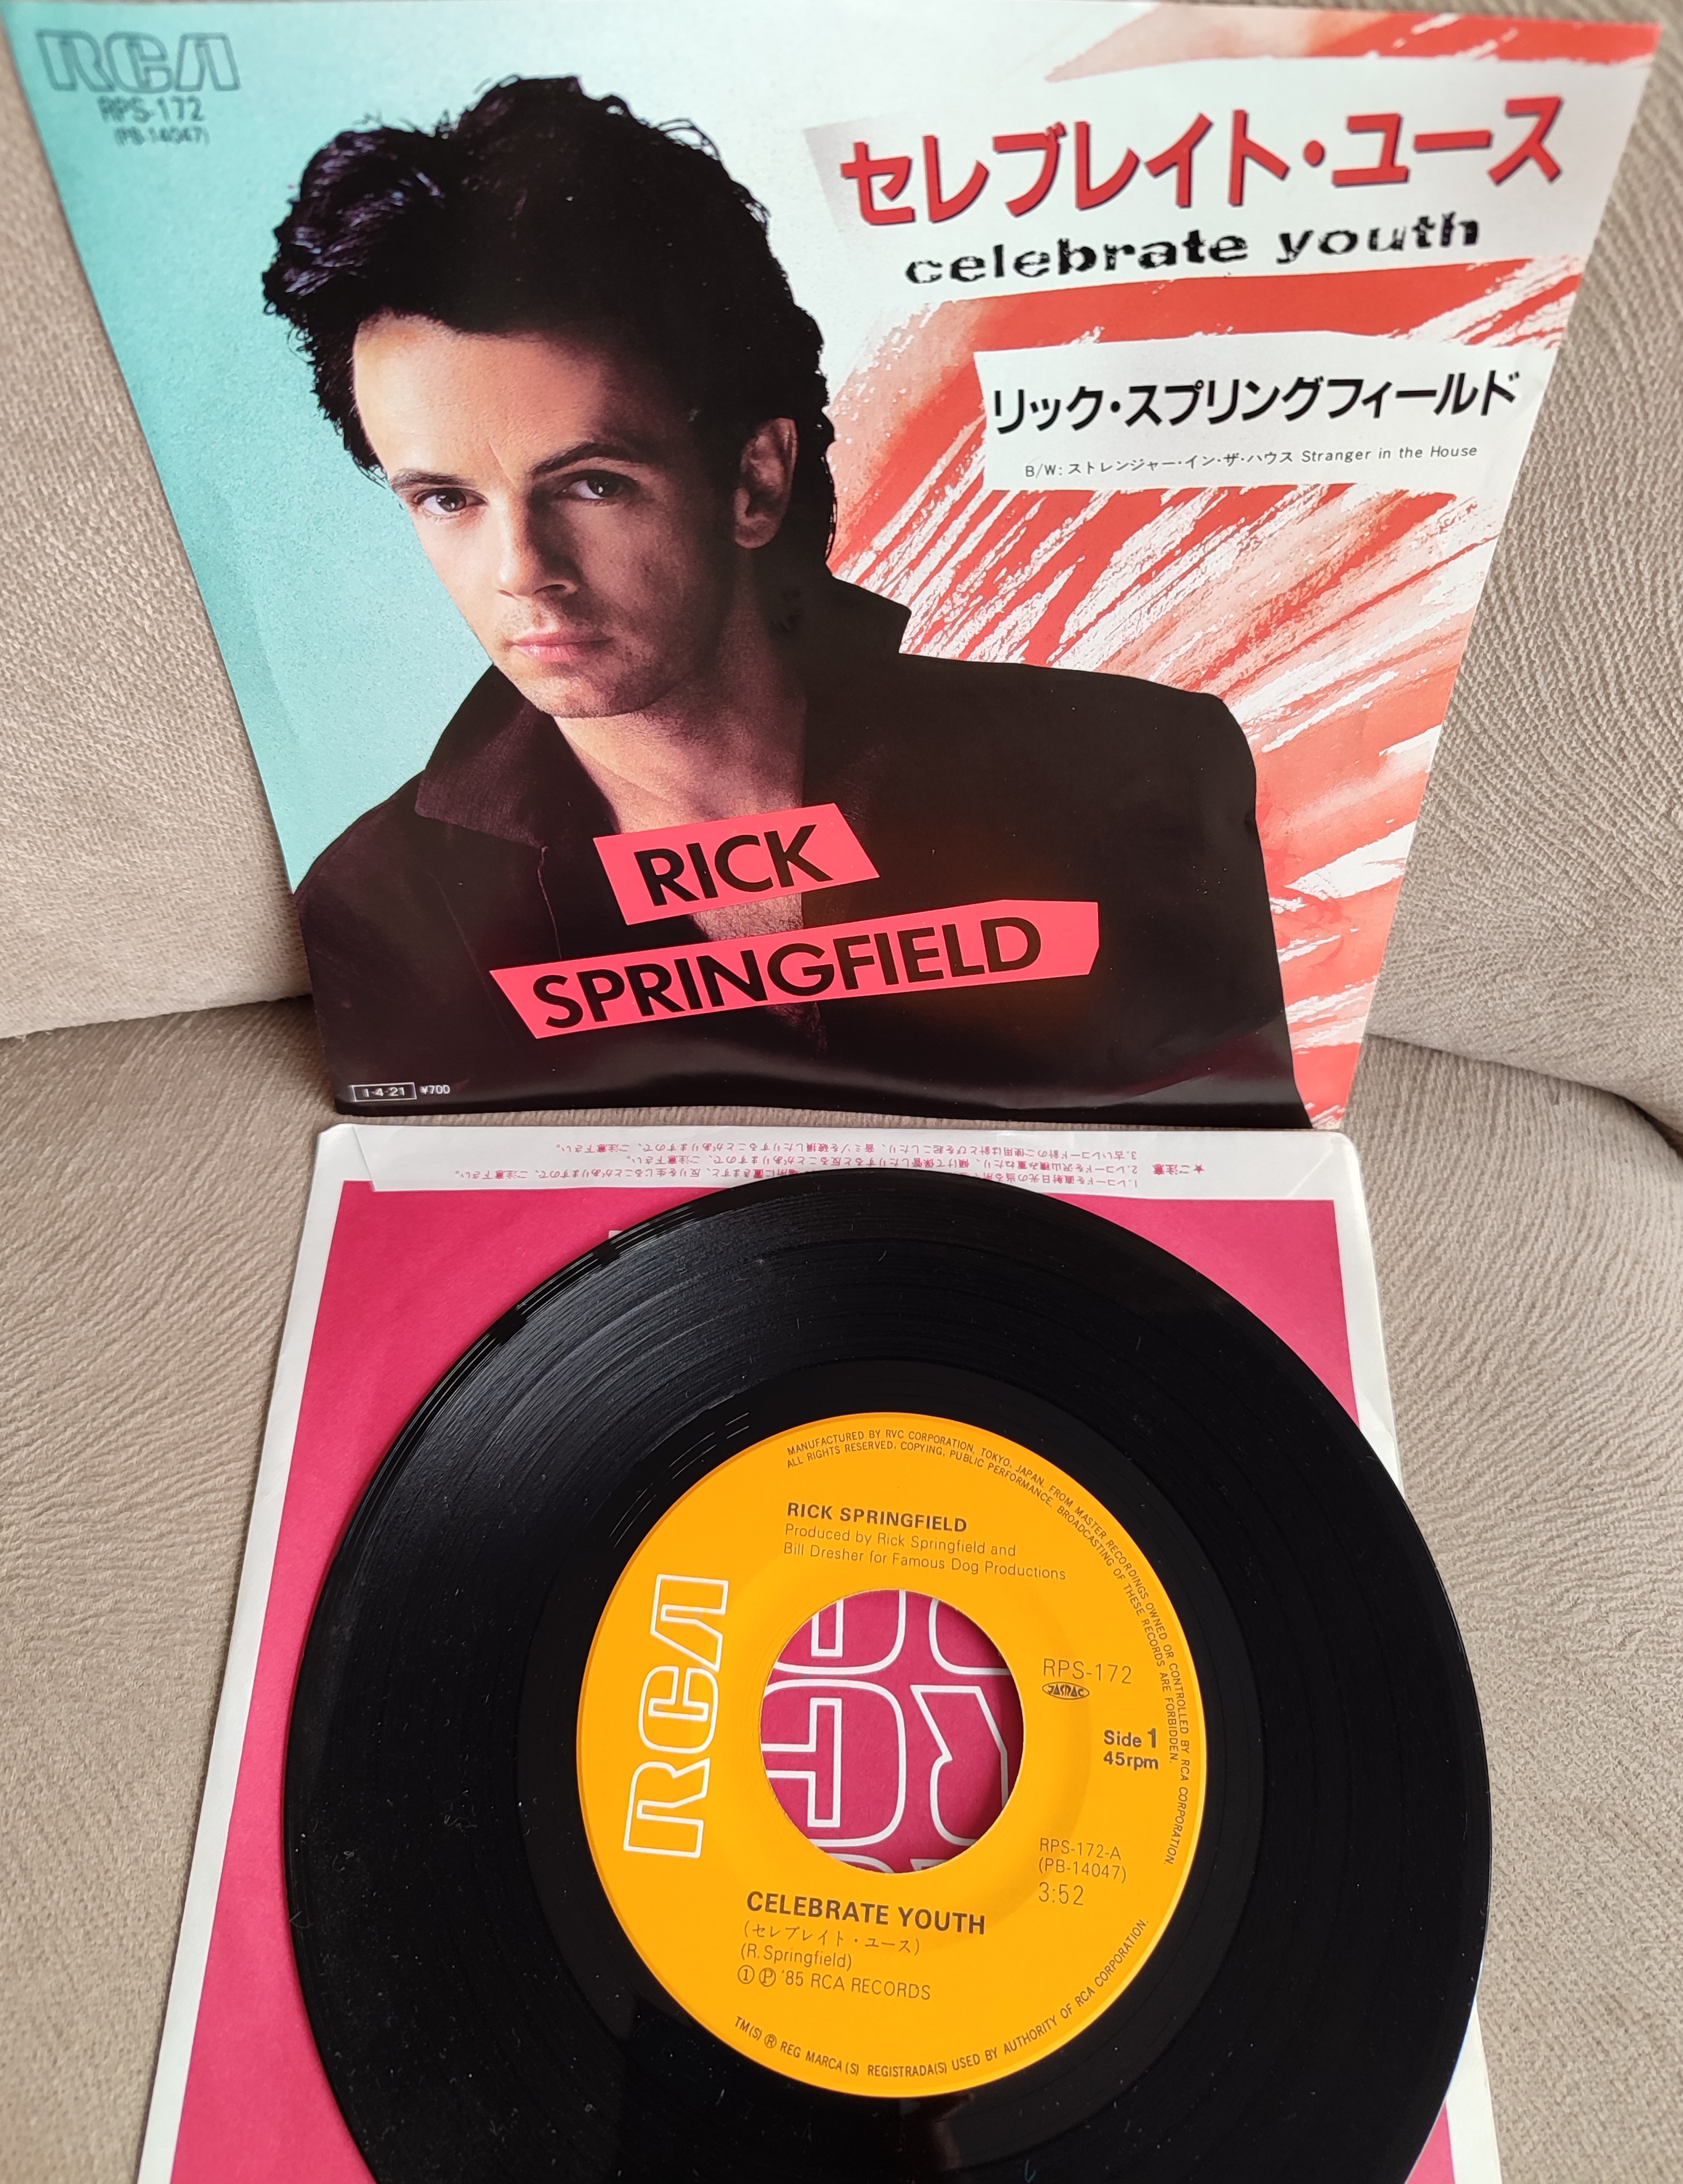 RICK SPRINGFIELD - Celebrate Youth - 1985 Japonya Basım 45lik Plak Temiz 2. el